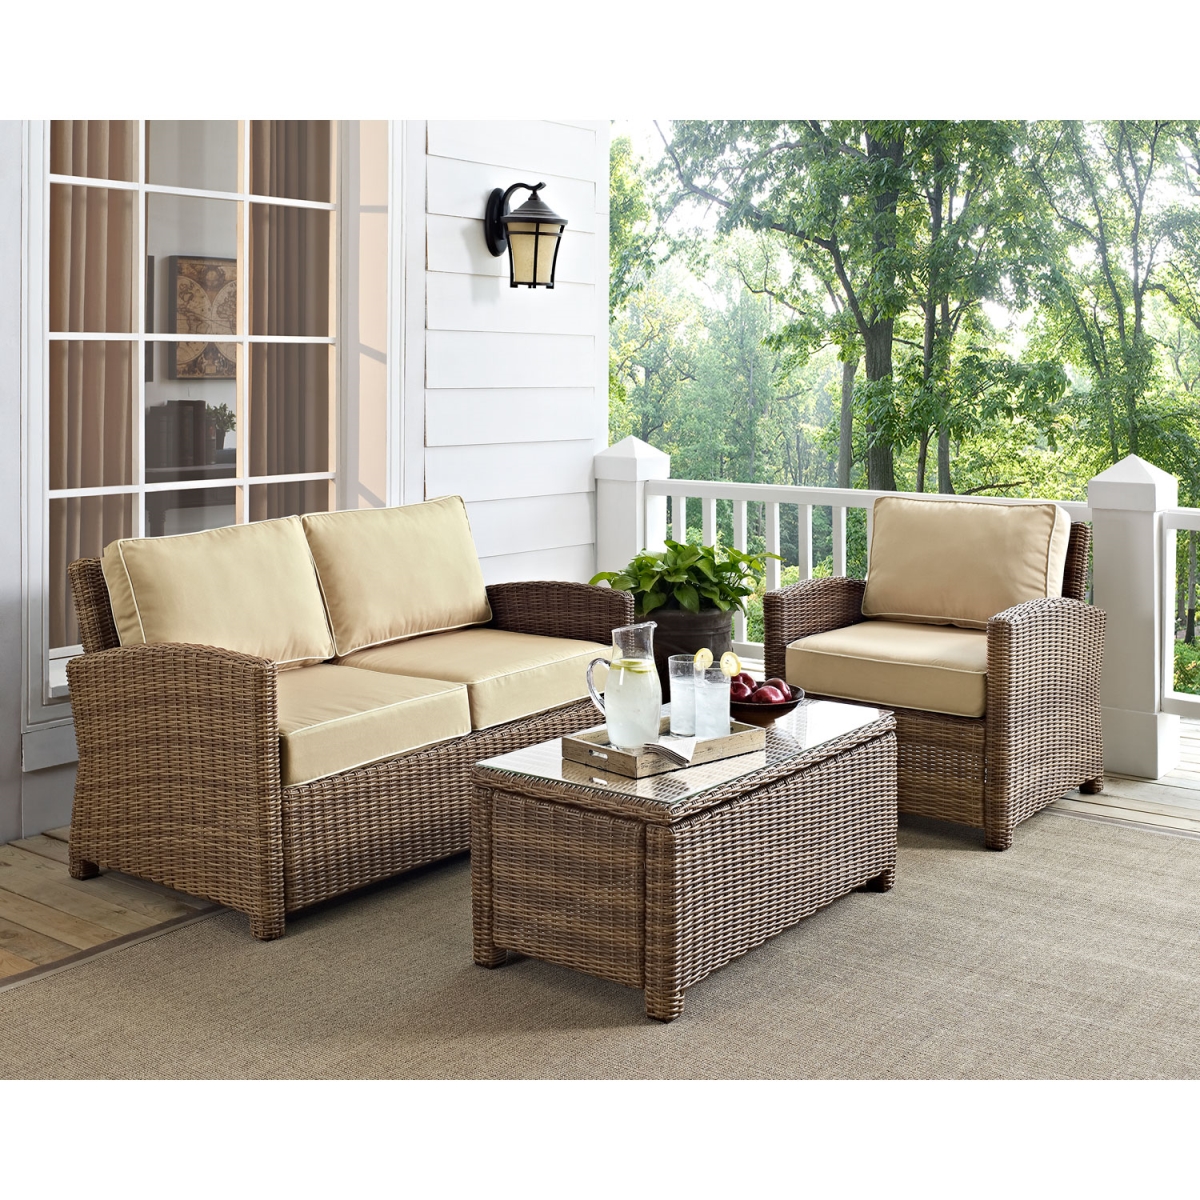 Ko70165-sa 3 Piece Bradenton Outdoor Loveseat Wicker Seating Set With Sand Cushions - Weathered Brown